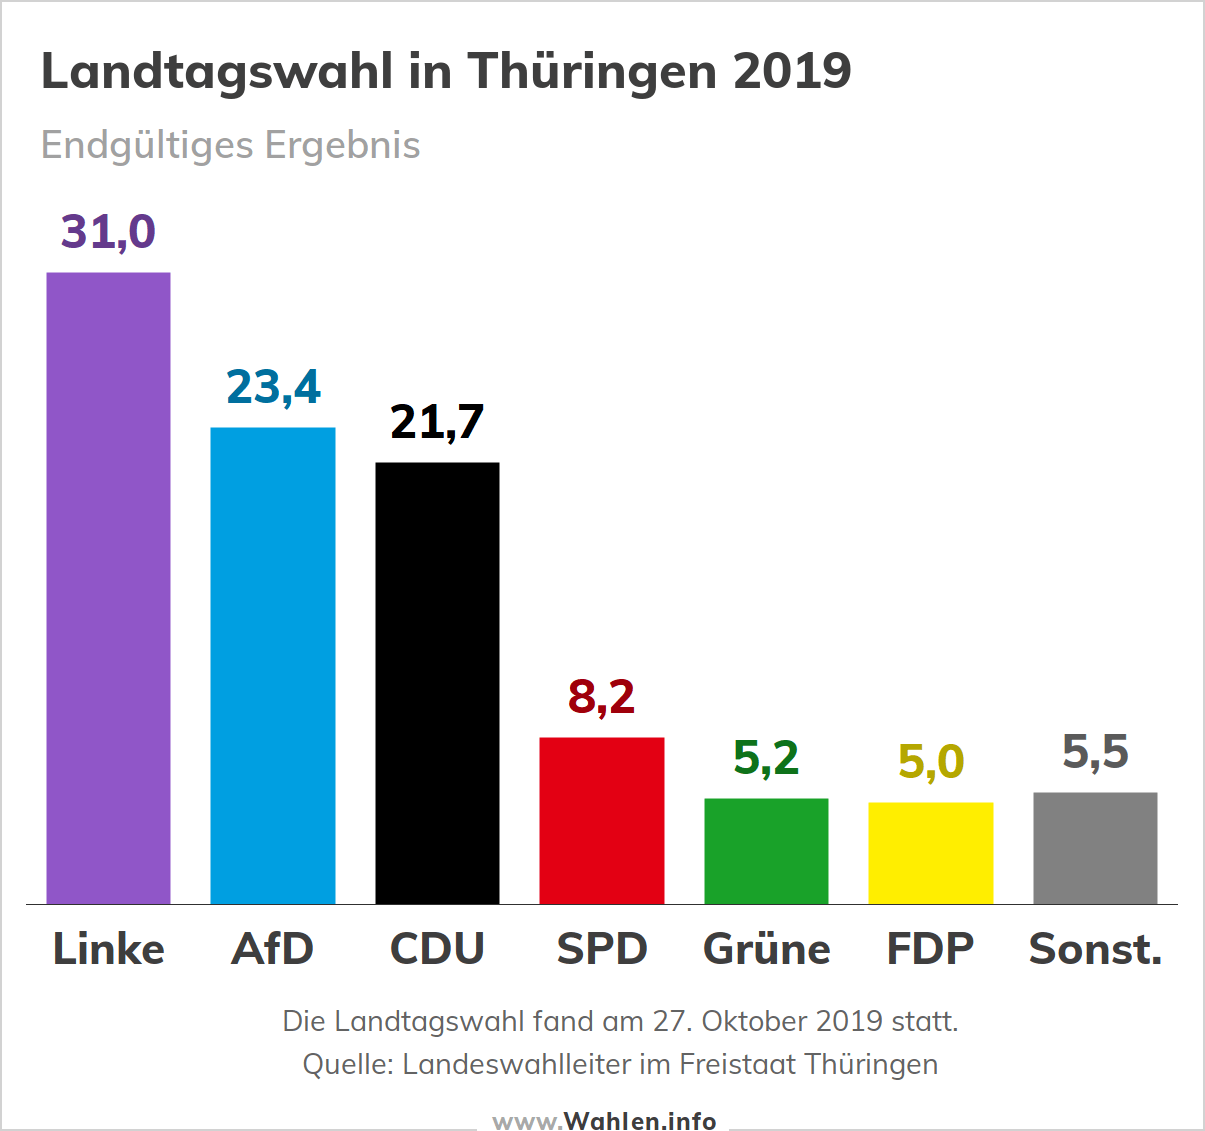 Ergebnis der Landtagswahl in Thüringen